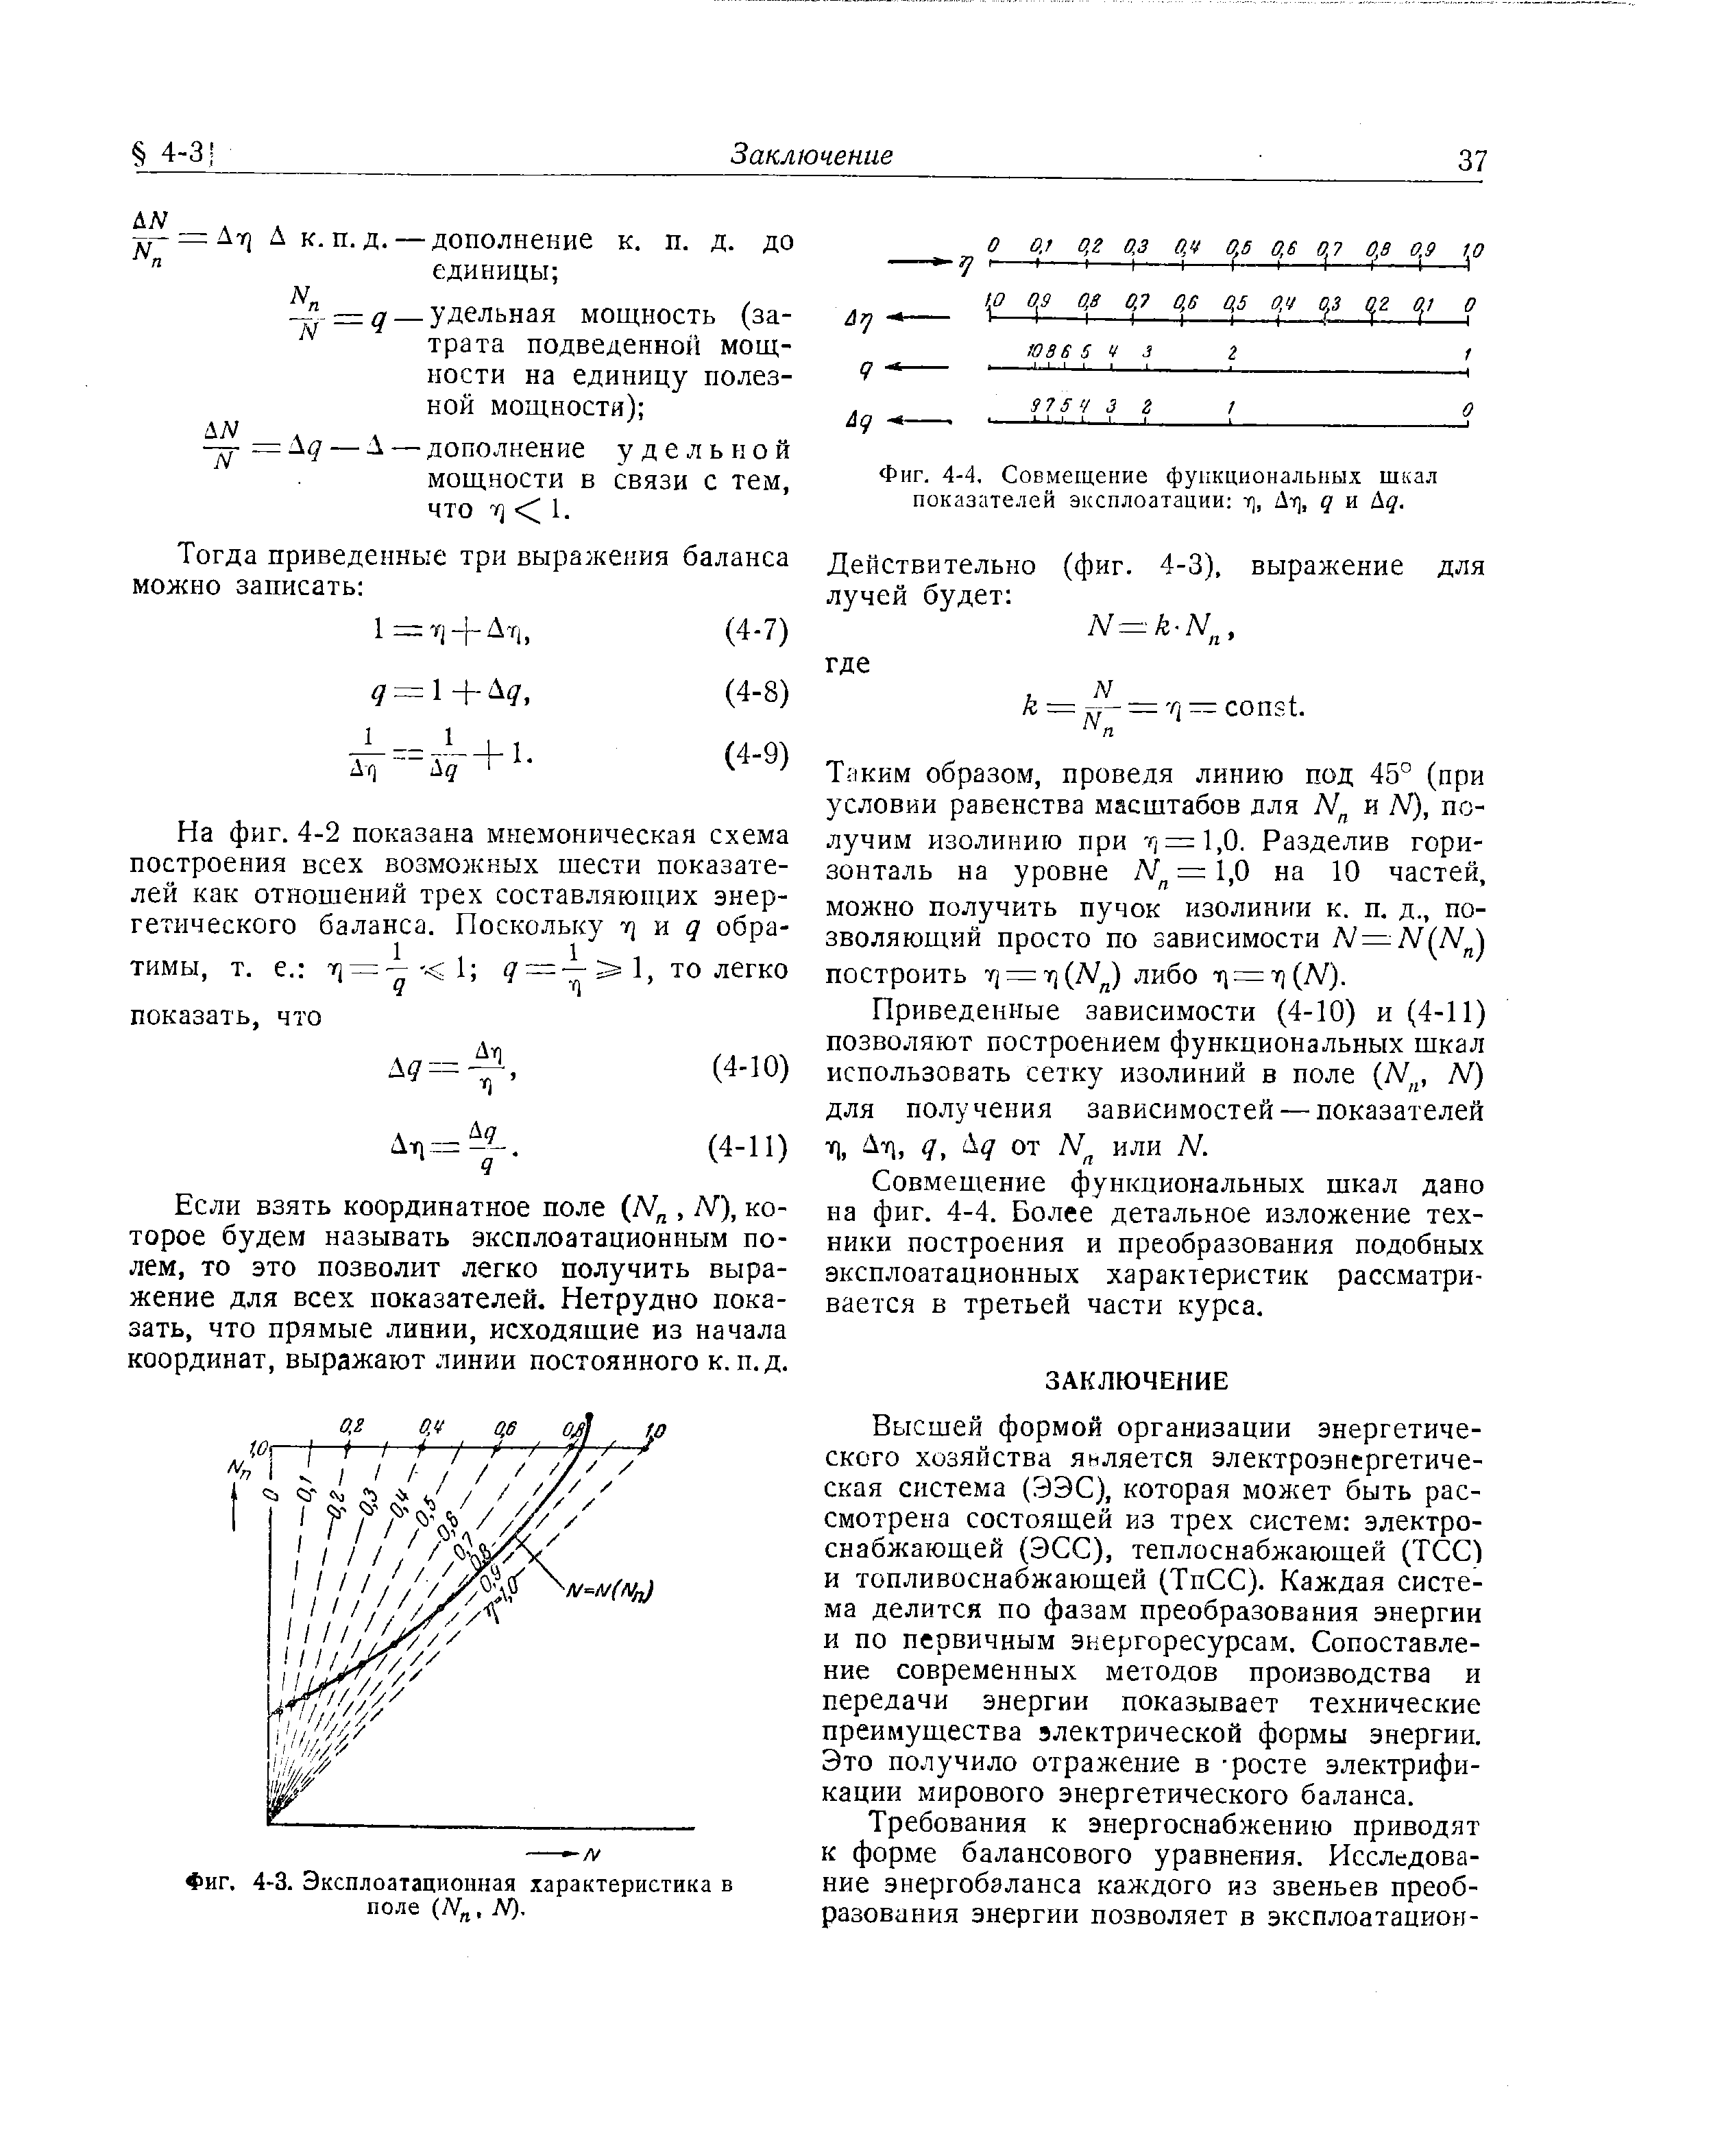 Фиг. 4-3. Эксплоатационная характеристика в поле (N , N).
